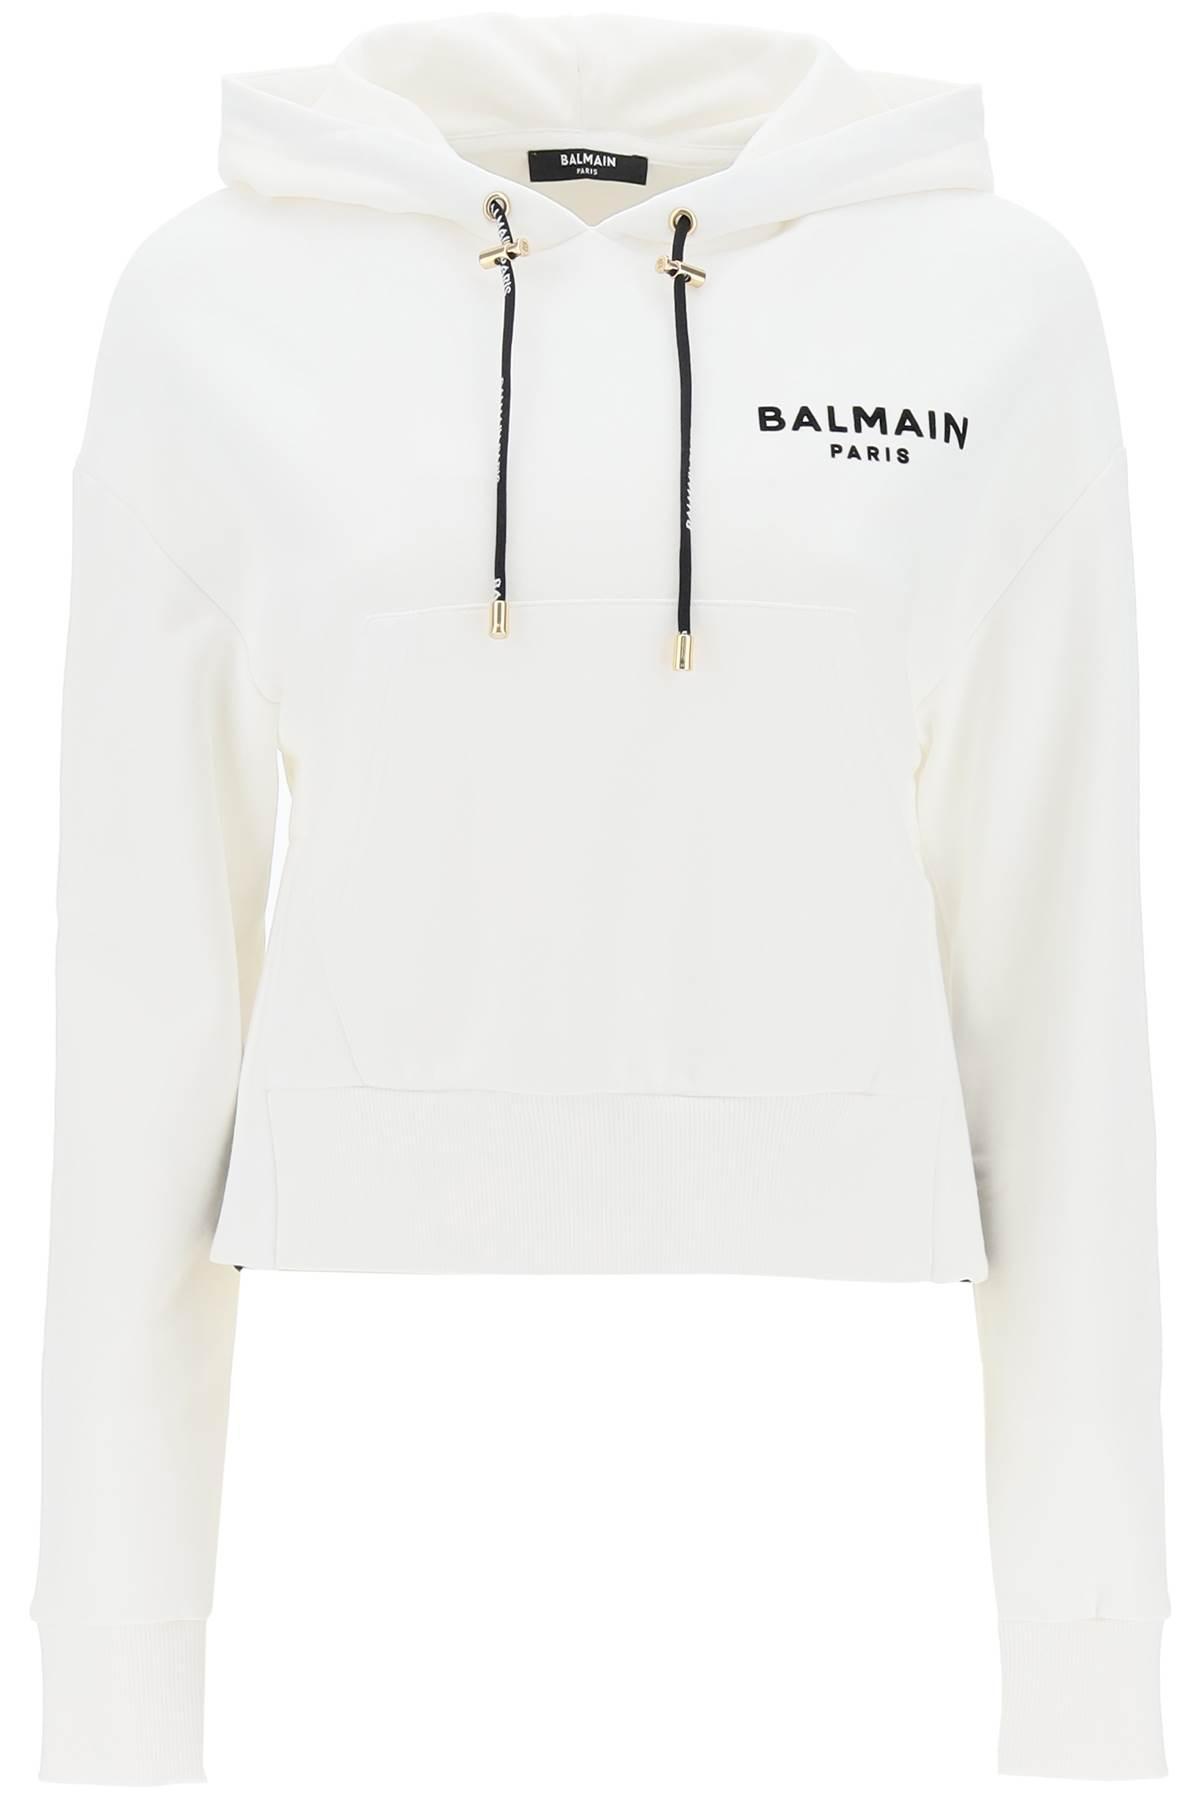 Balmain Cropped Sweatshirt With Flocked Logo White | Lyst